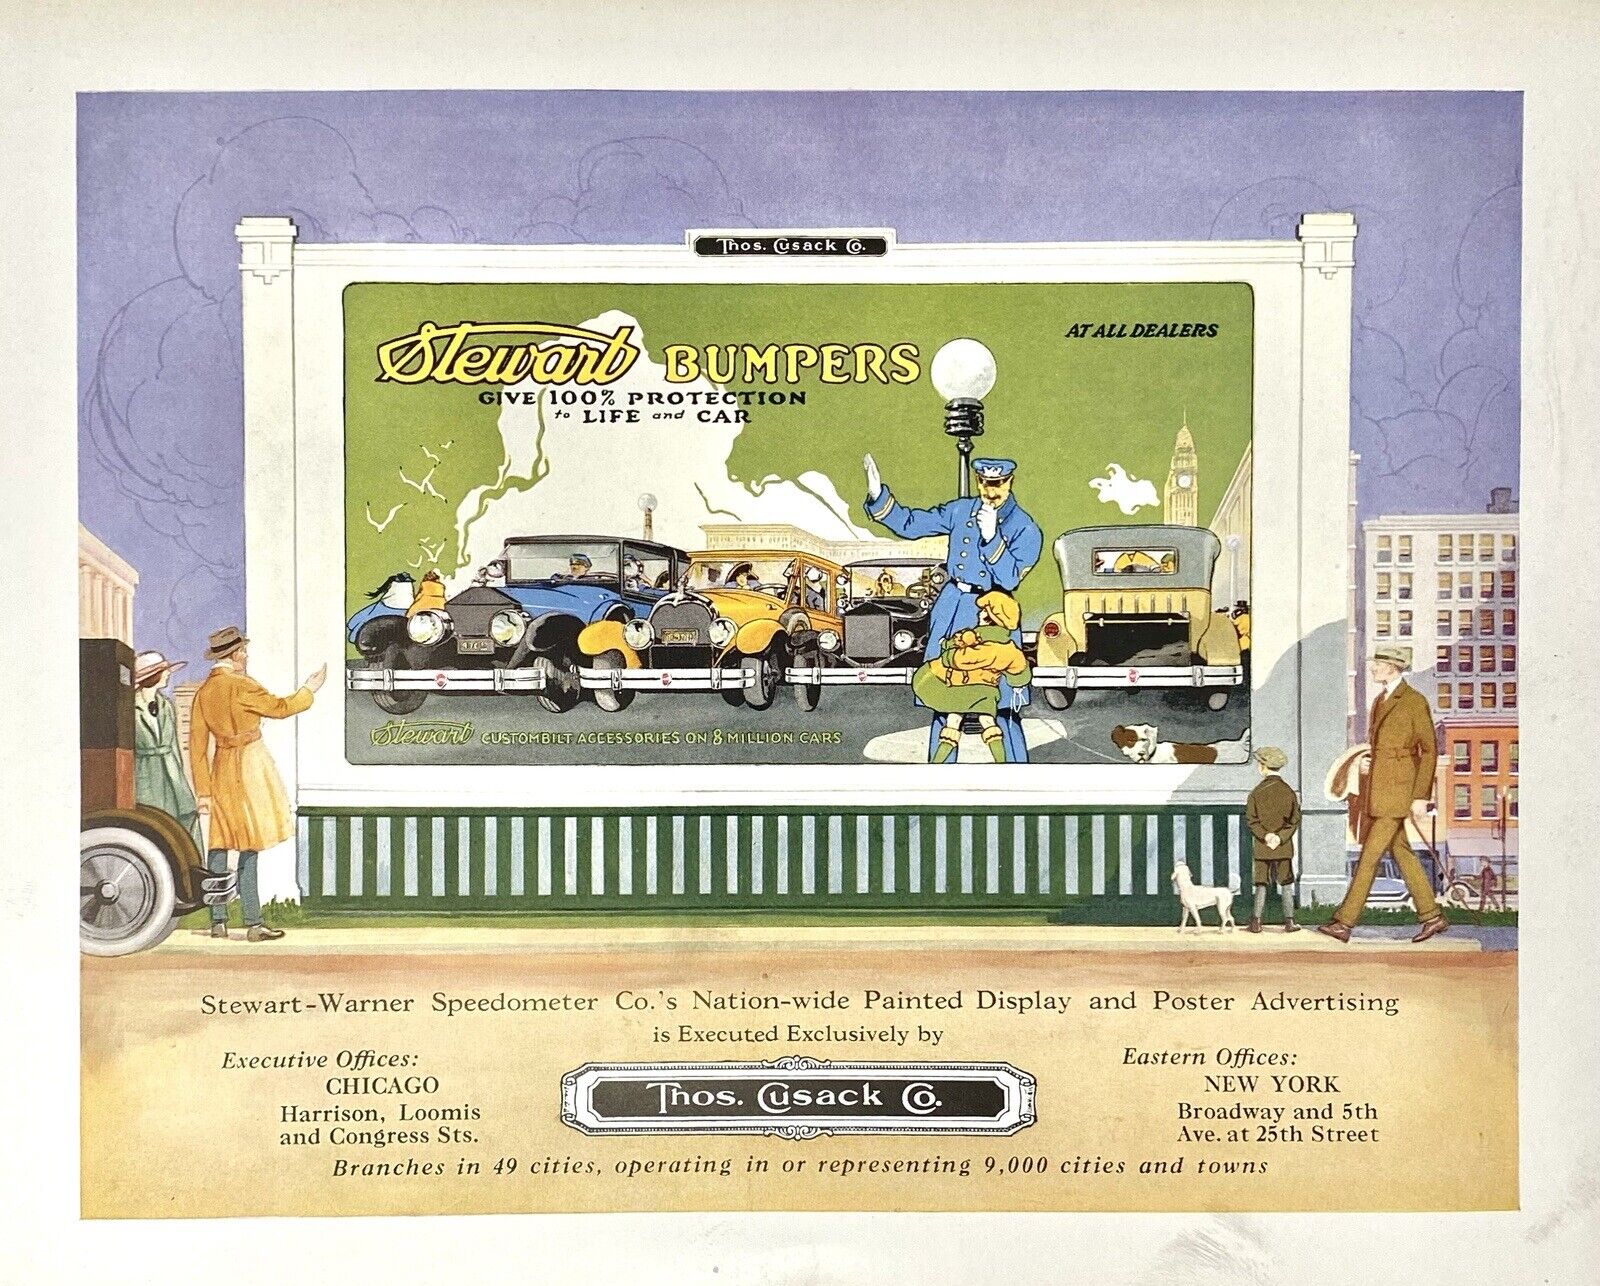 Antique Stewart Bumpers Print Ad Thomas Cusack Co. Original